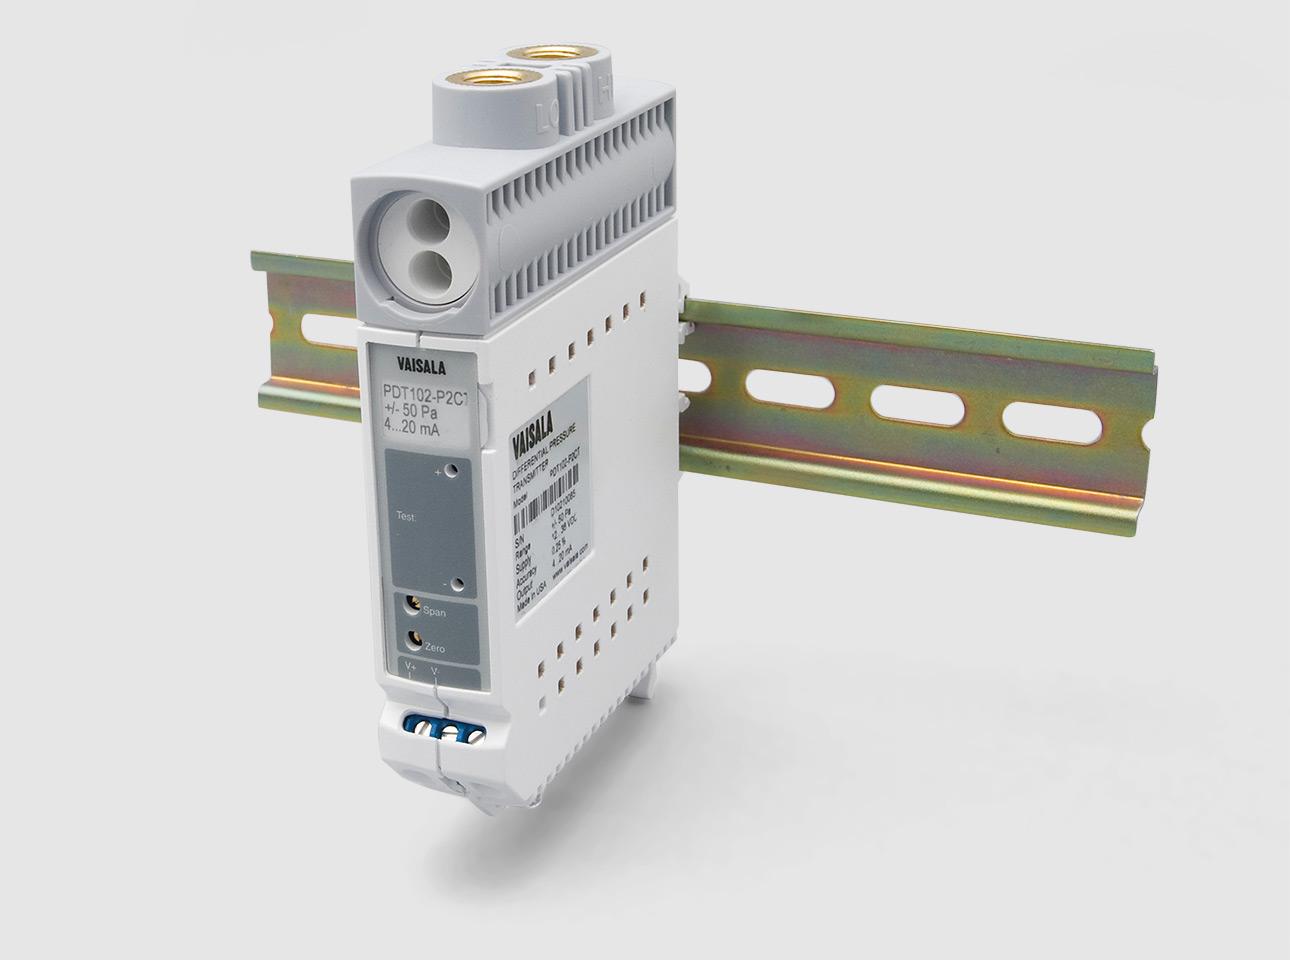 Vaisala Differential Pressure Transmitter PDT102